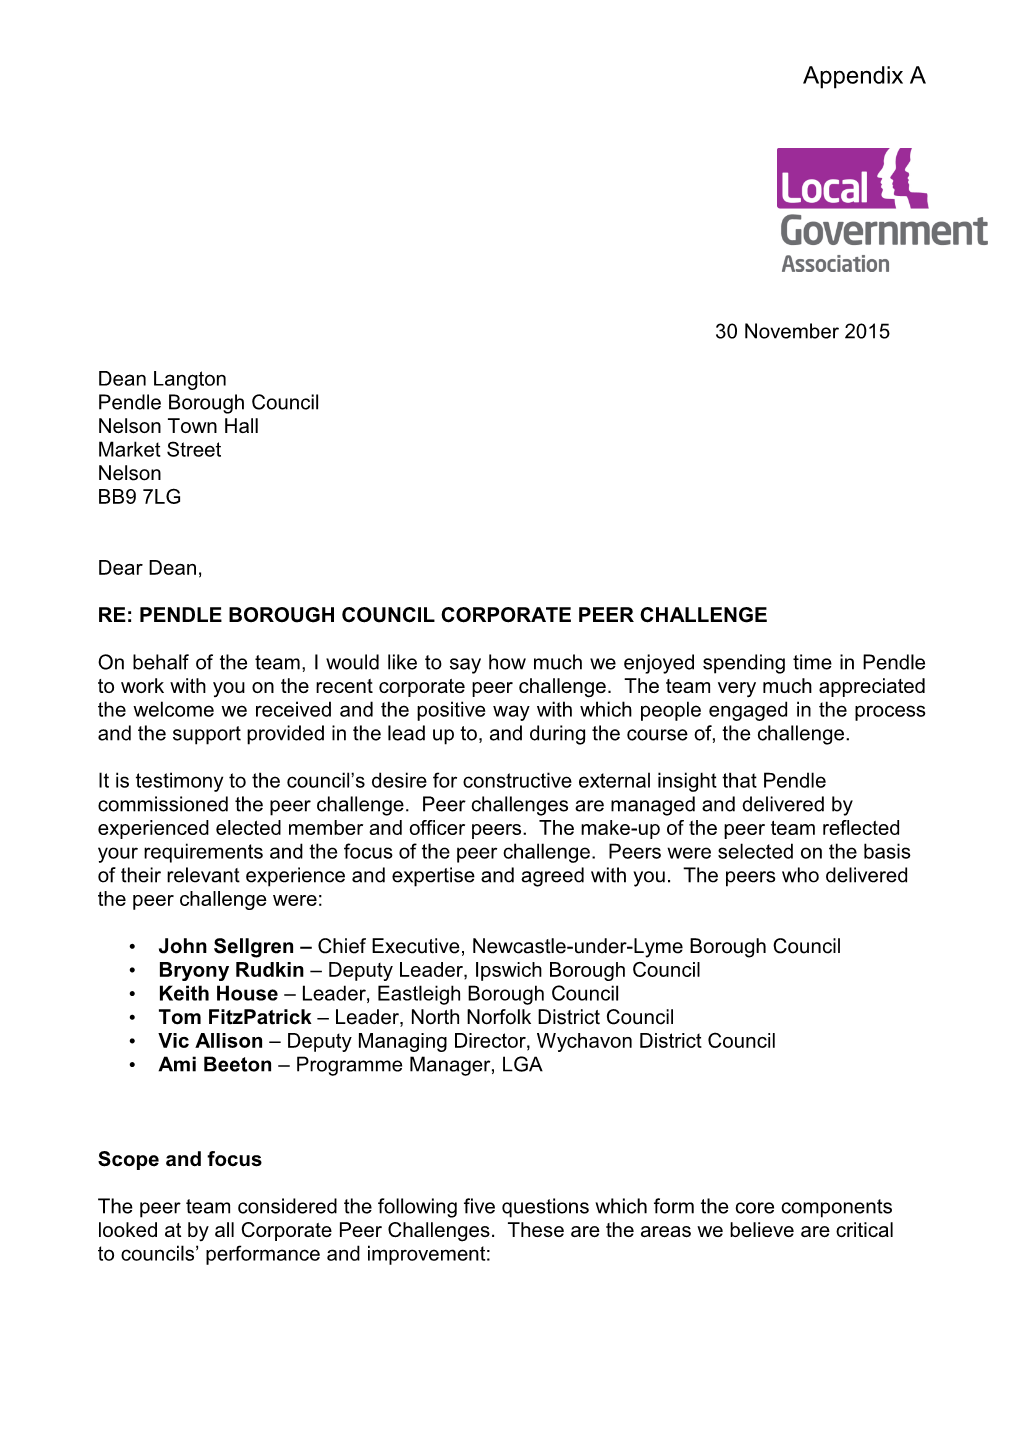 Corporate Peer Challenge Pendle Borough Council 2015